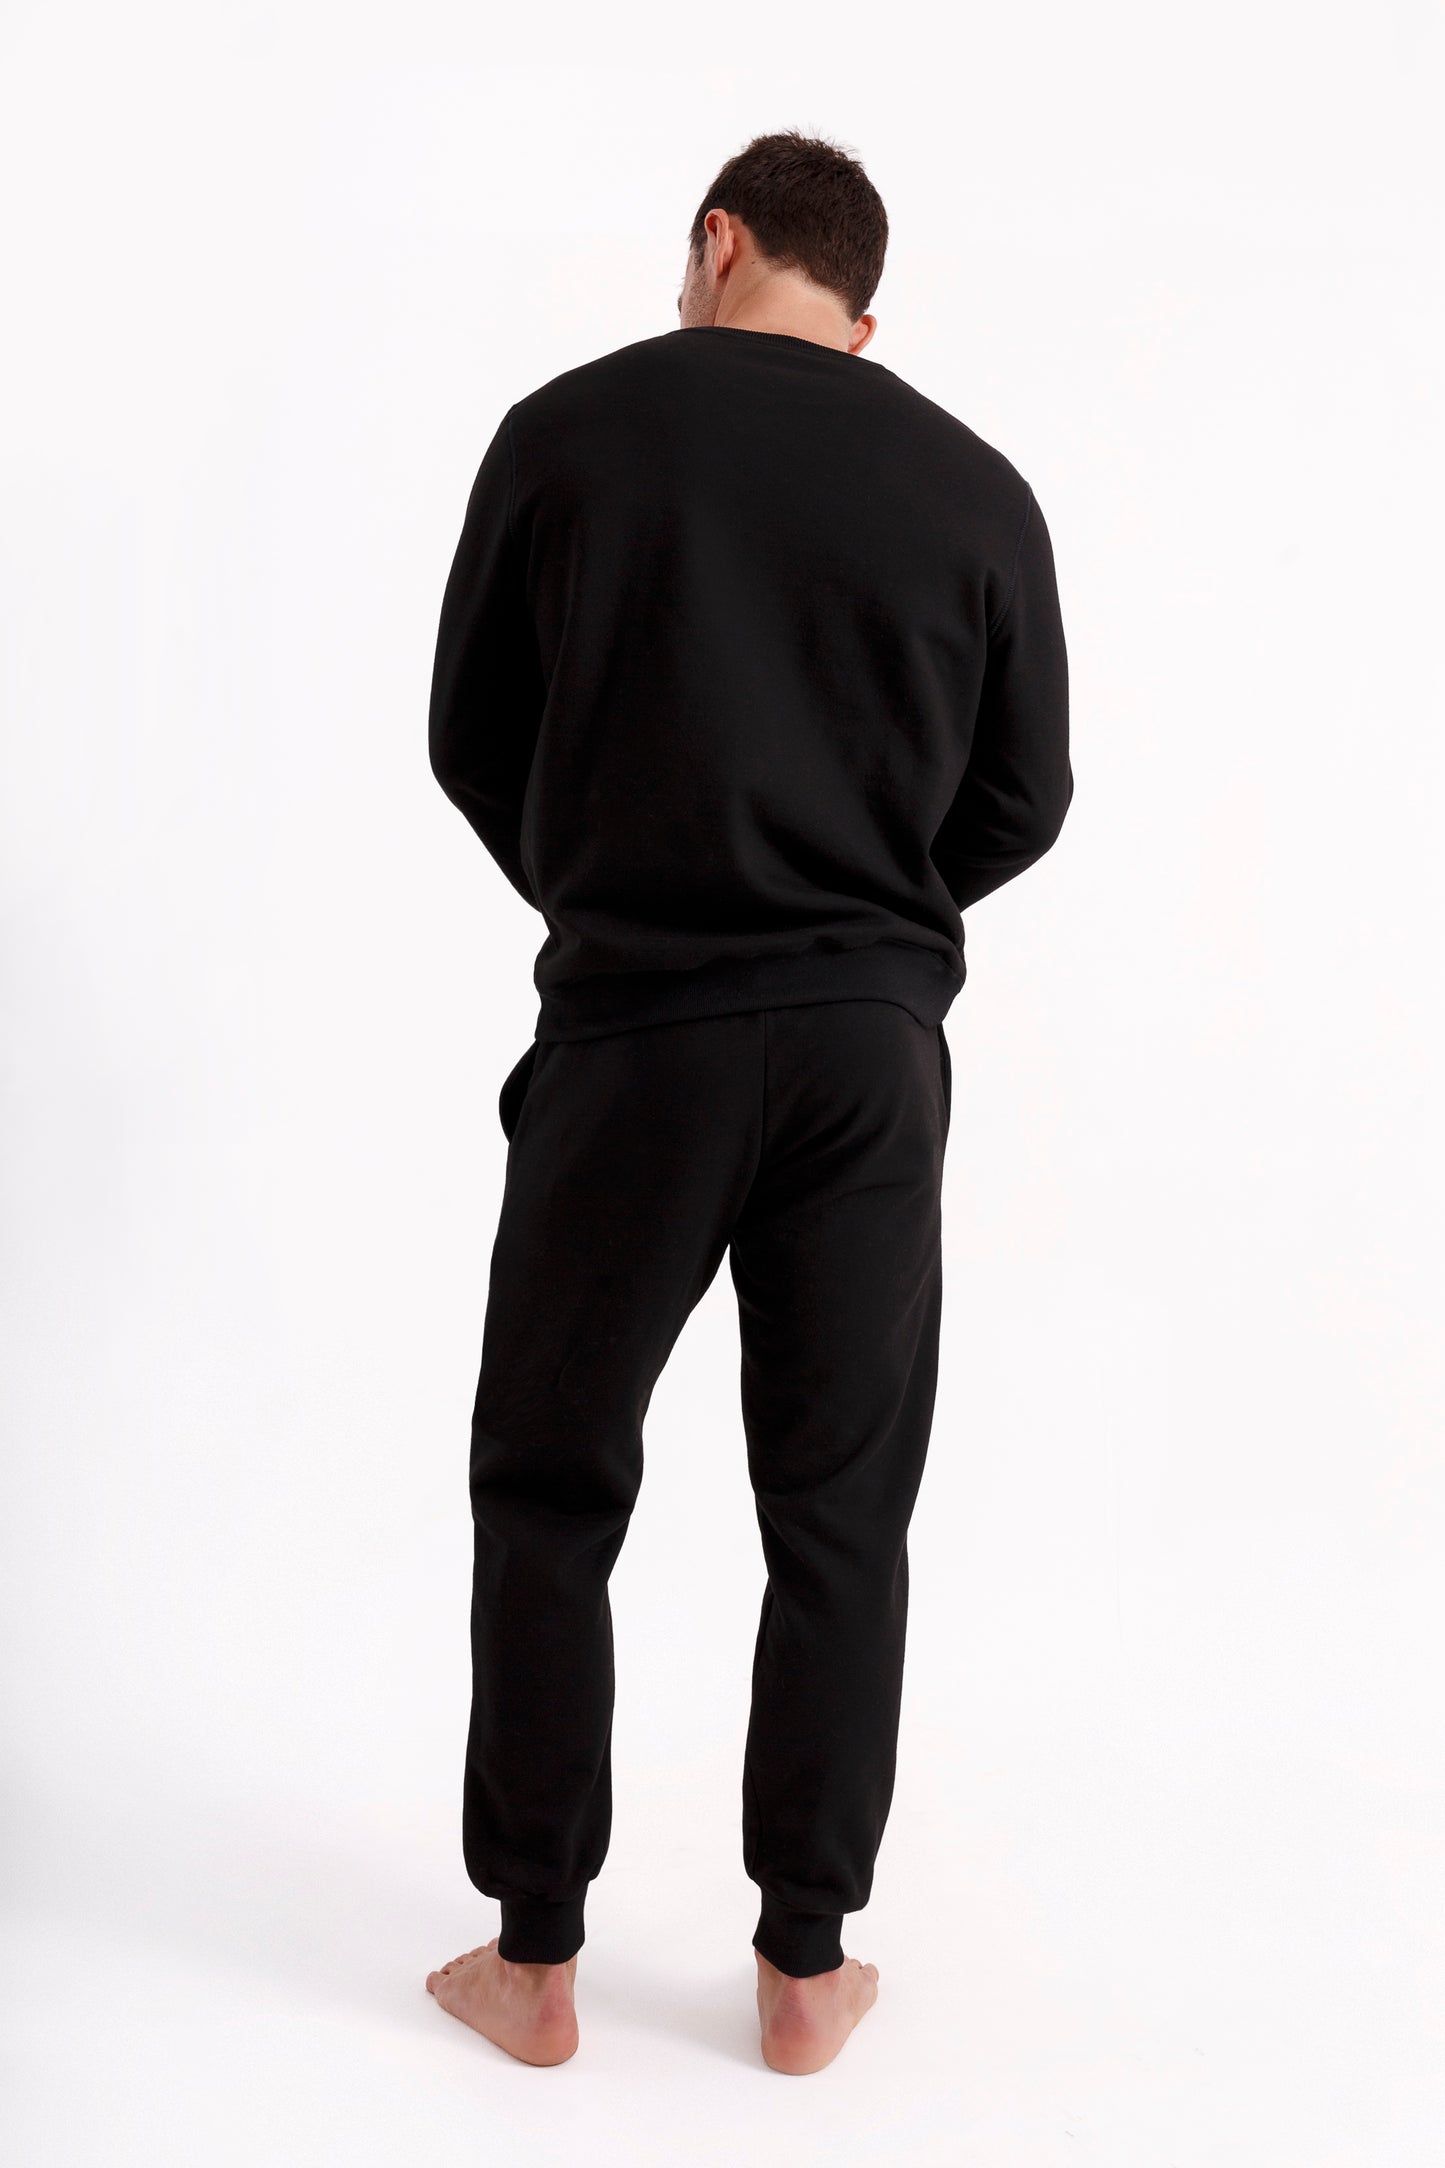 Unisex Sweatshirt - Black